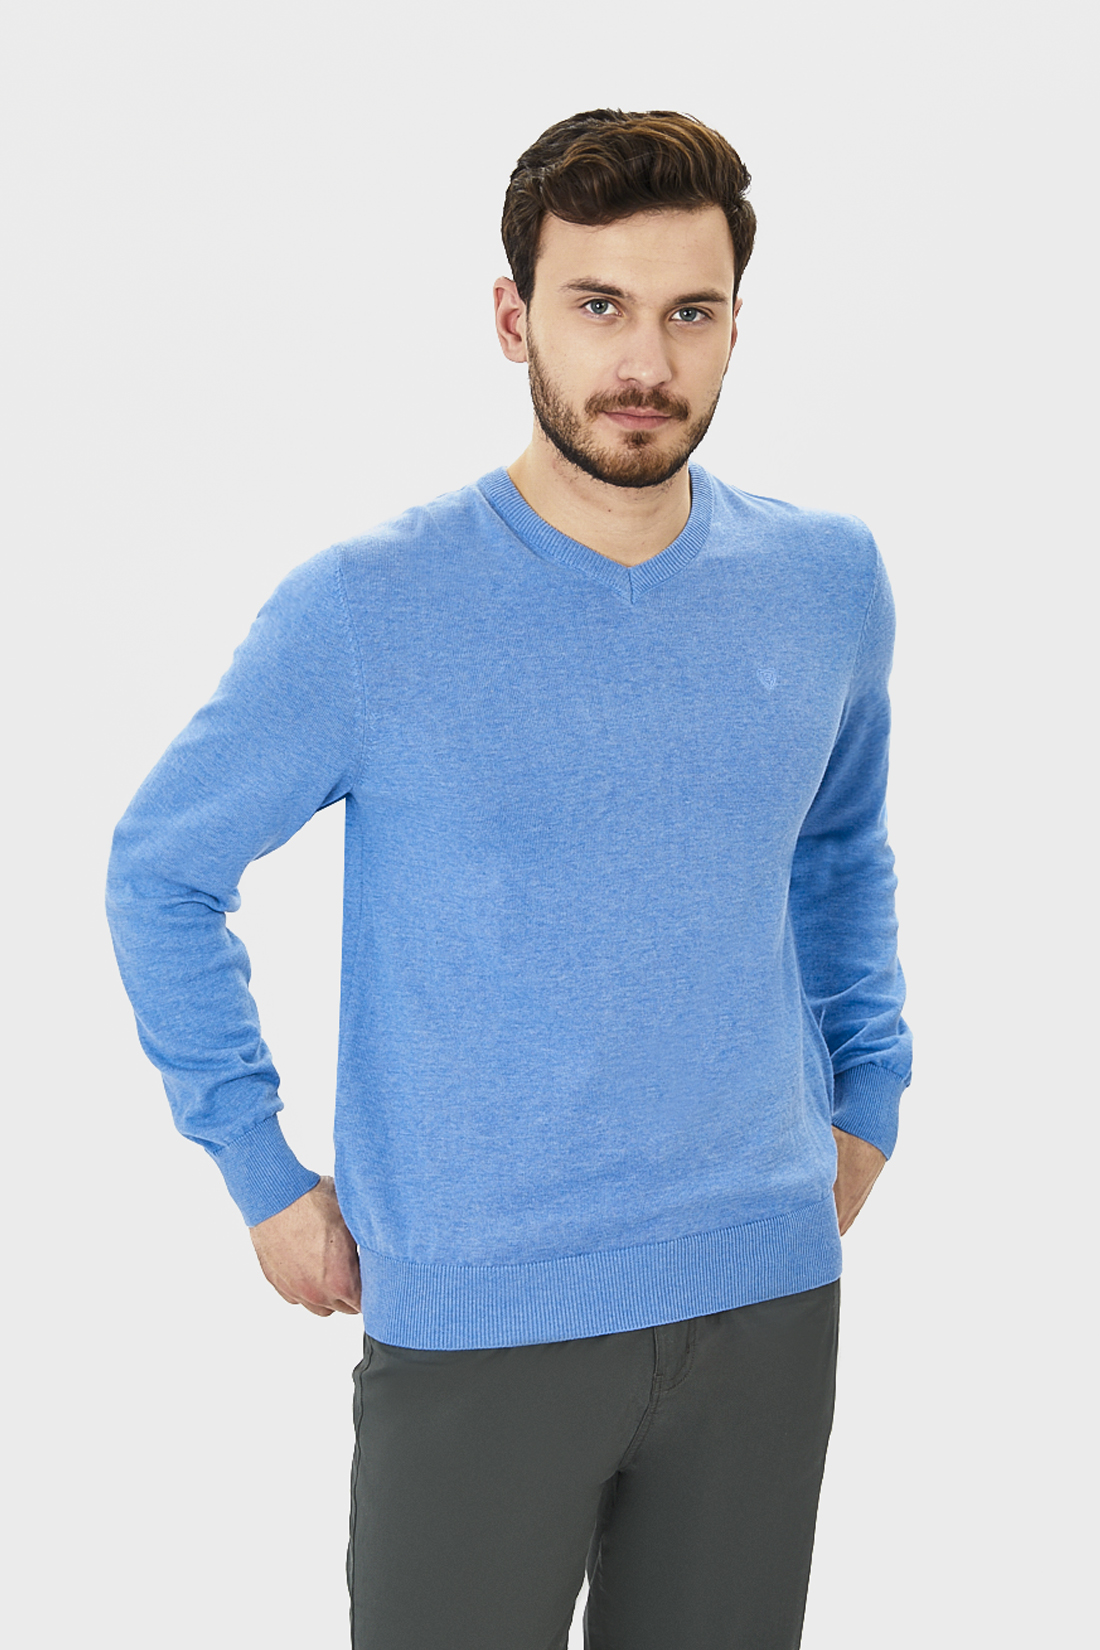 Базовый пуловер с хлопком (арт. baon B631201), размер 3XL, цвет белый